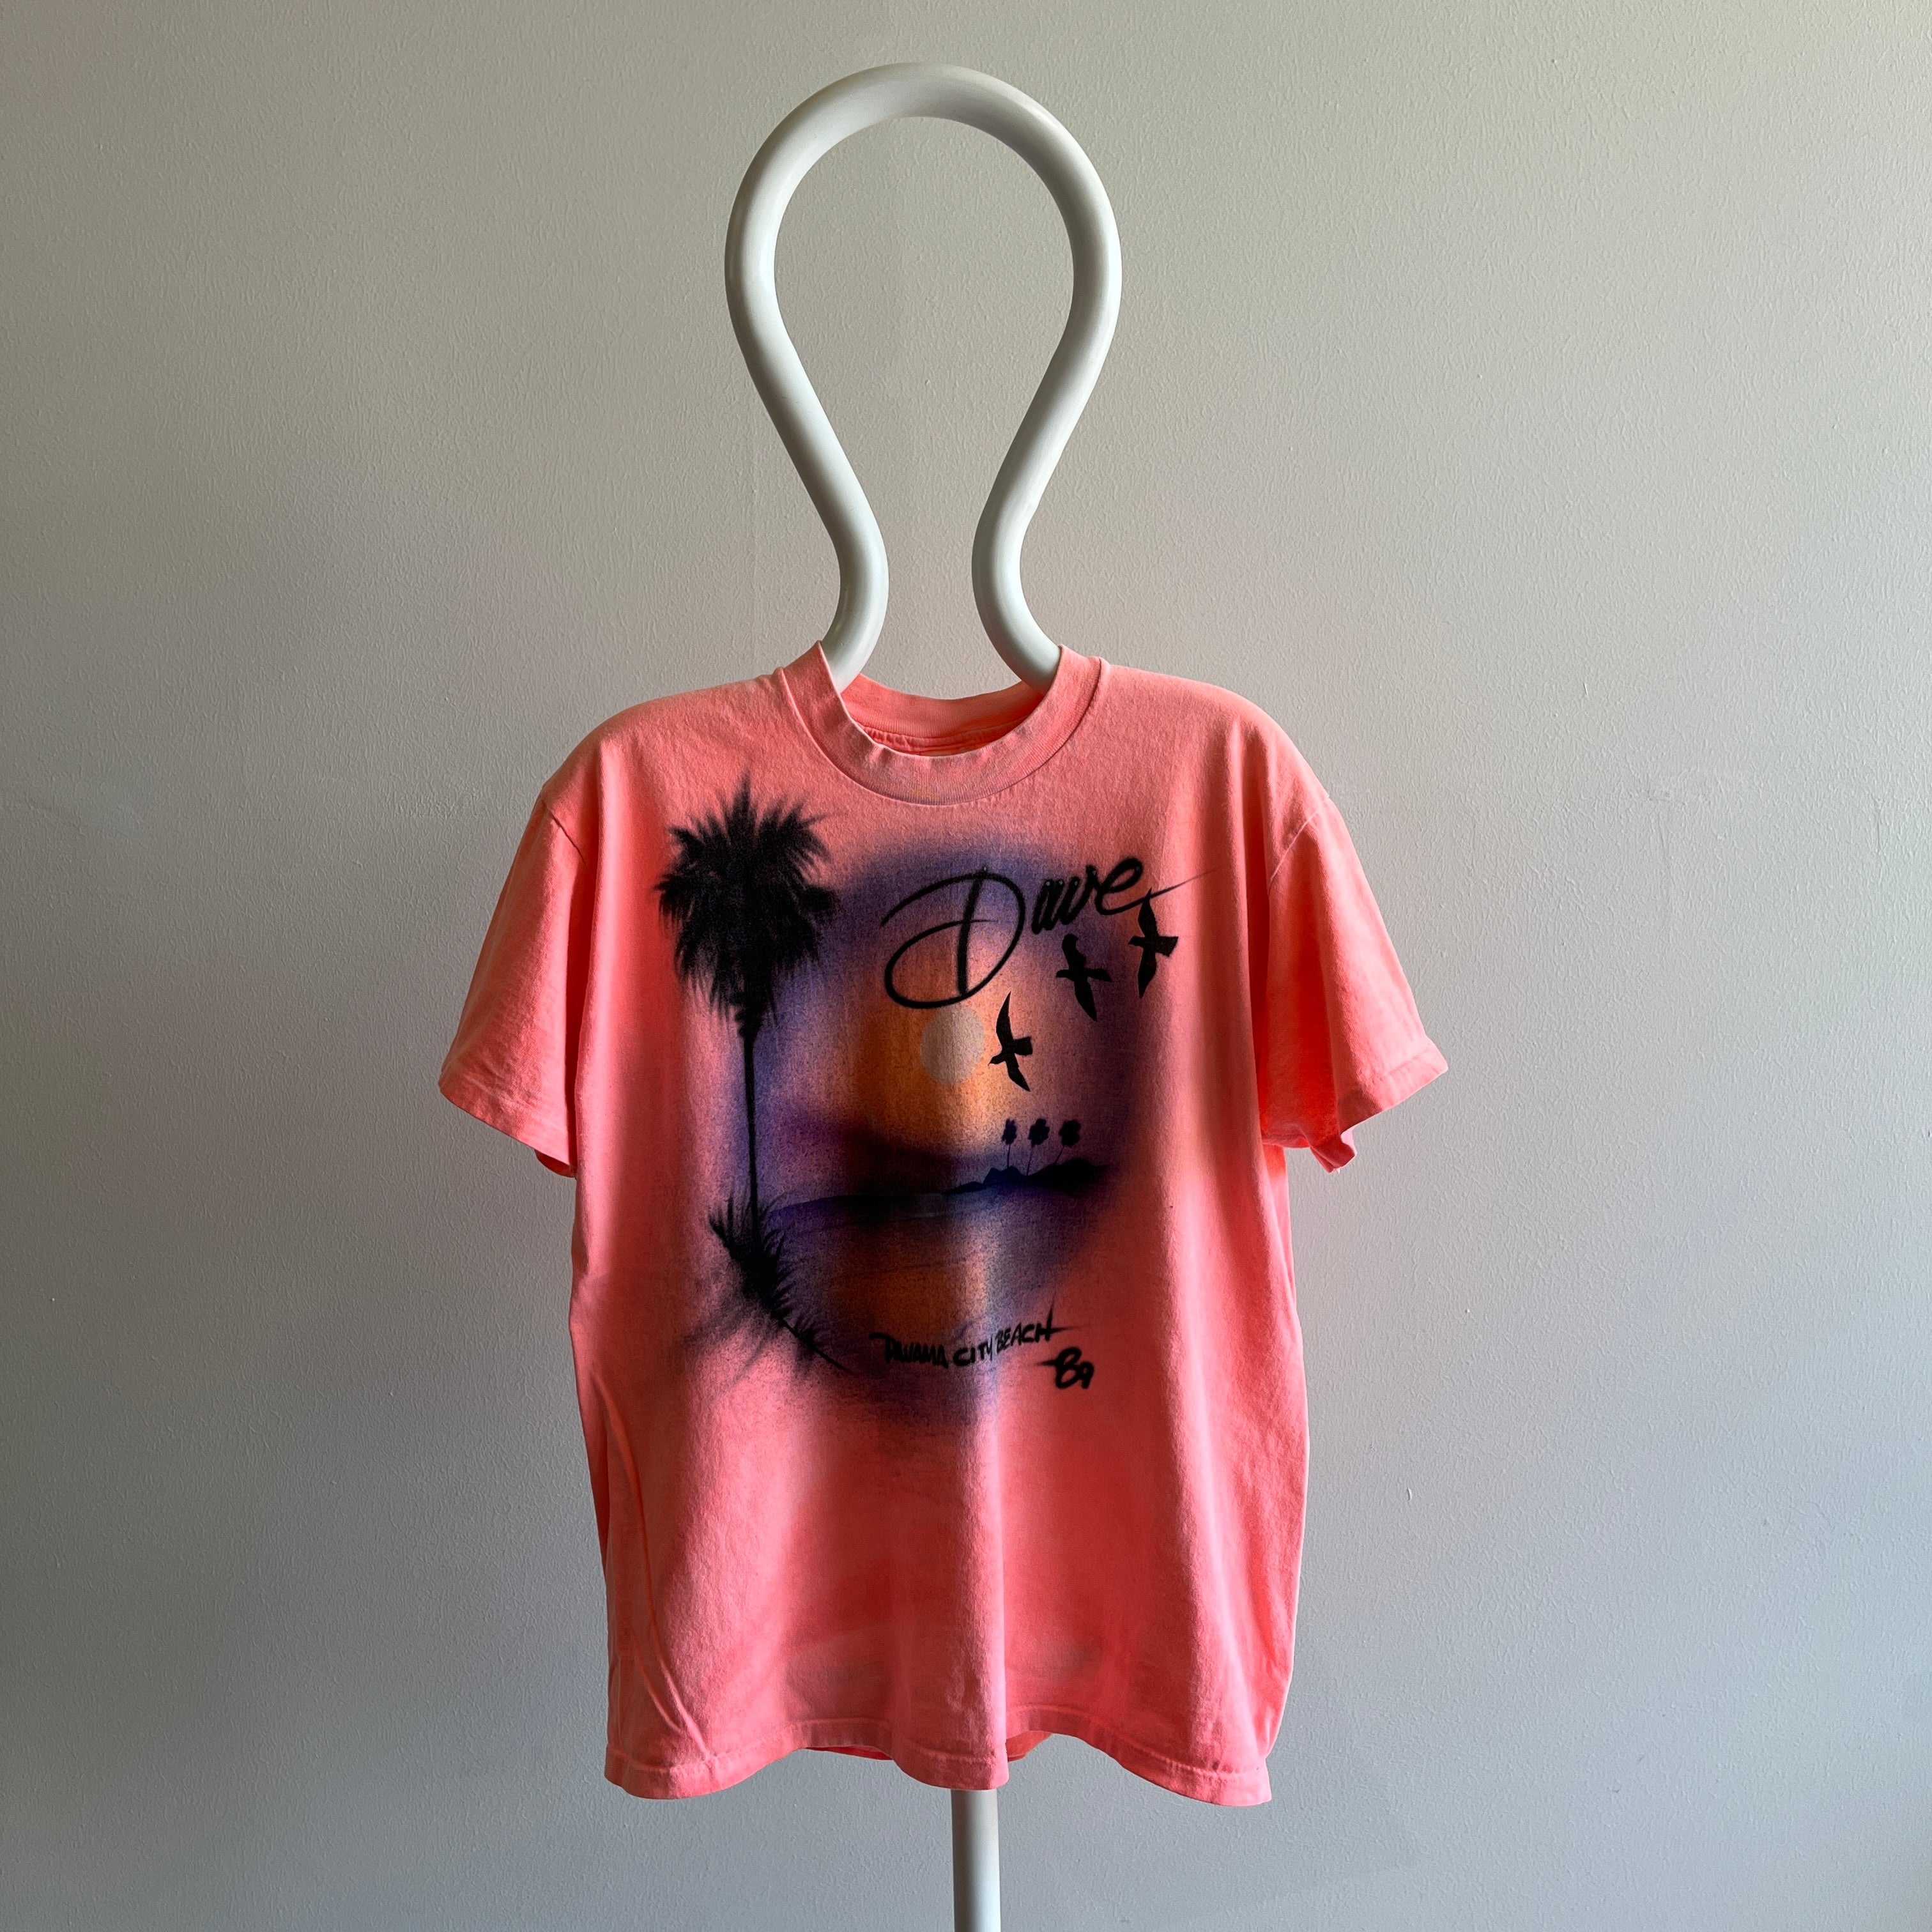 1989 Airbrushed Shirt for Dave by a Stedman Super Hi-Cru